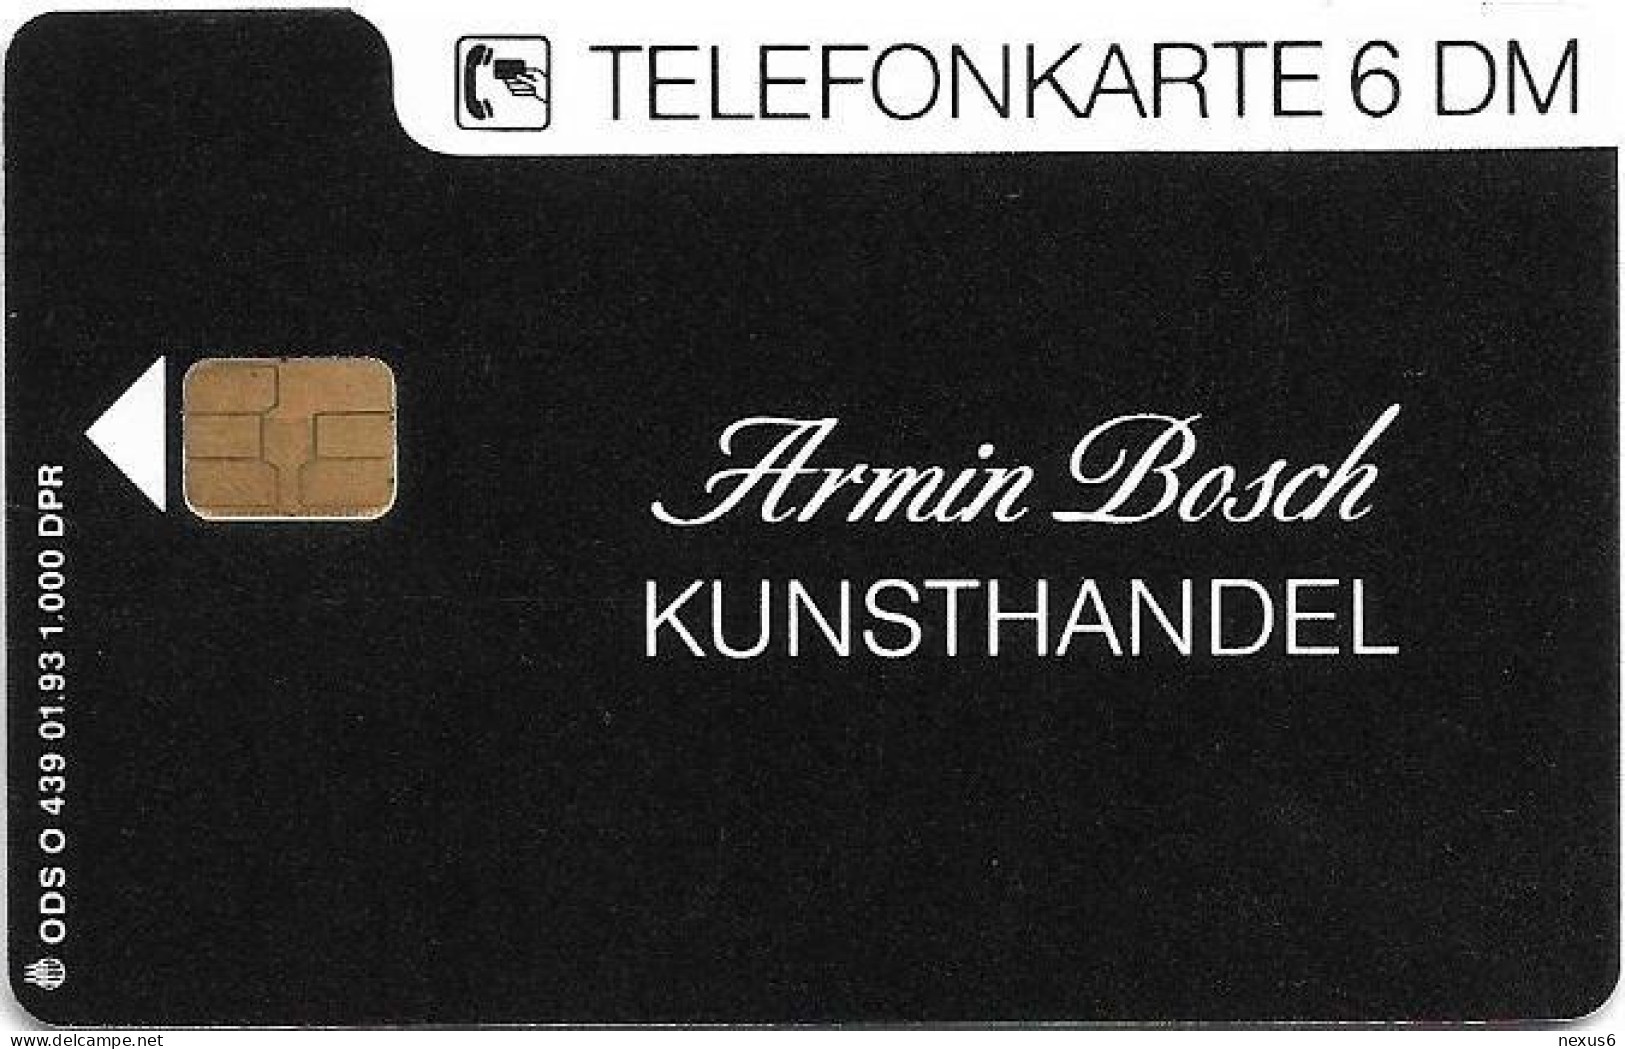 Germany - Kunsthandel Armin Bosch - O 0439 - 01.1993, 6DM, 1.000ex, Mint - O-Series : Customers Sets